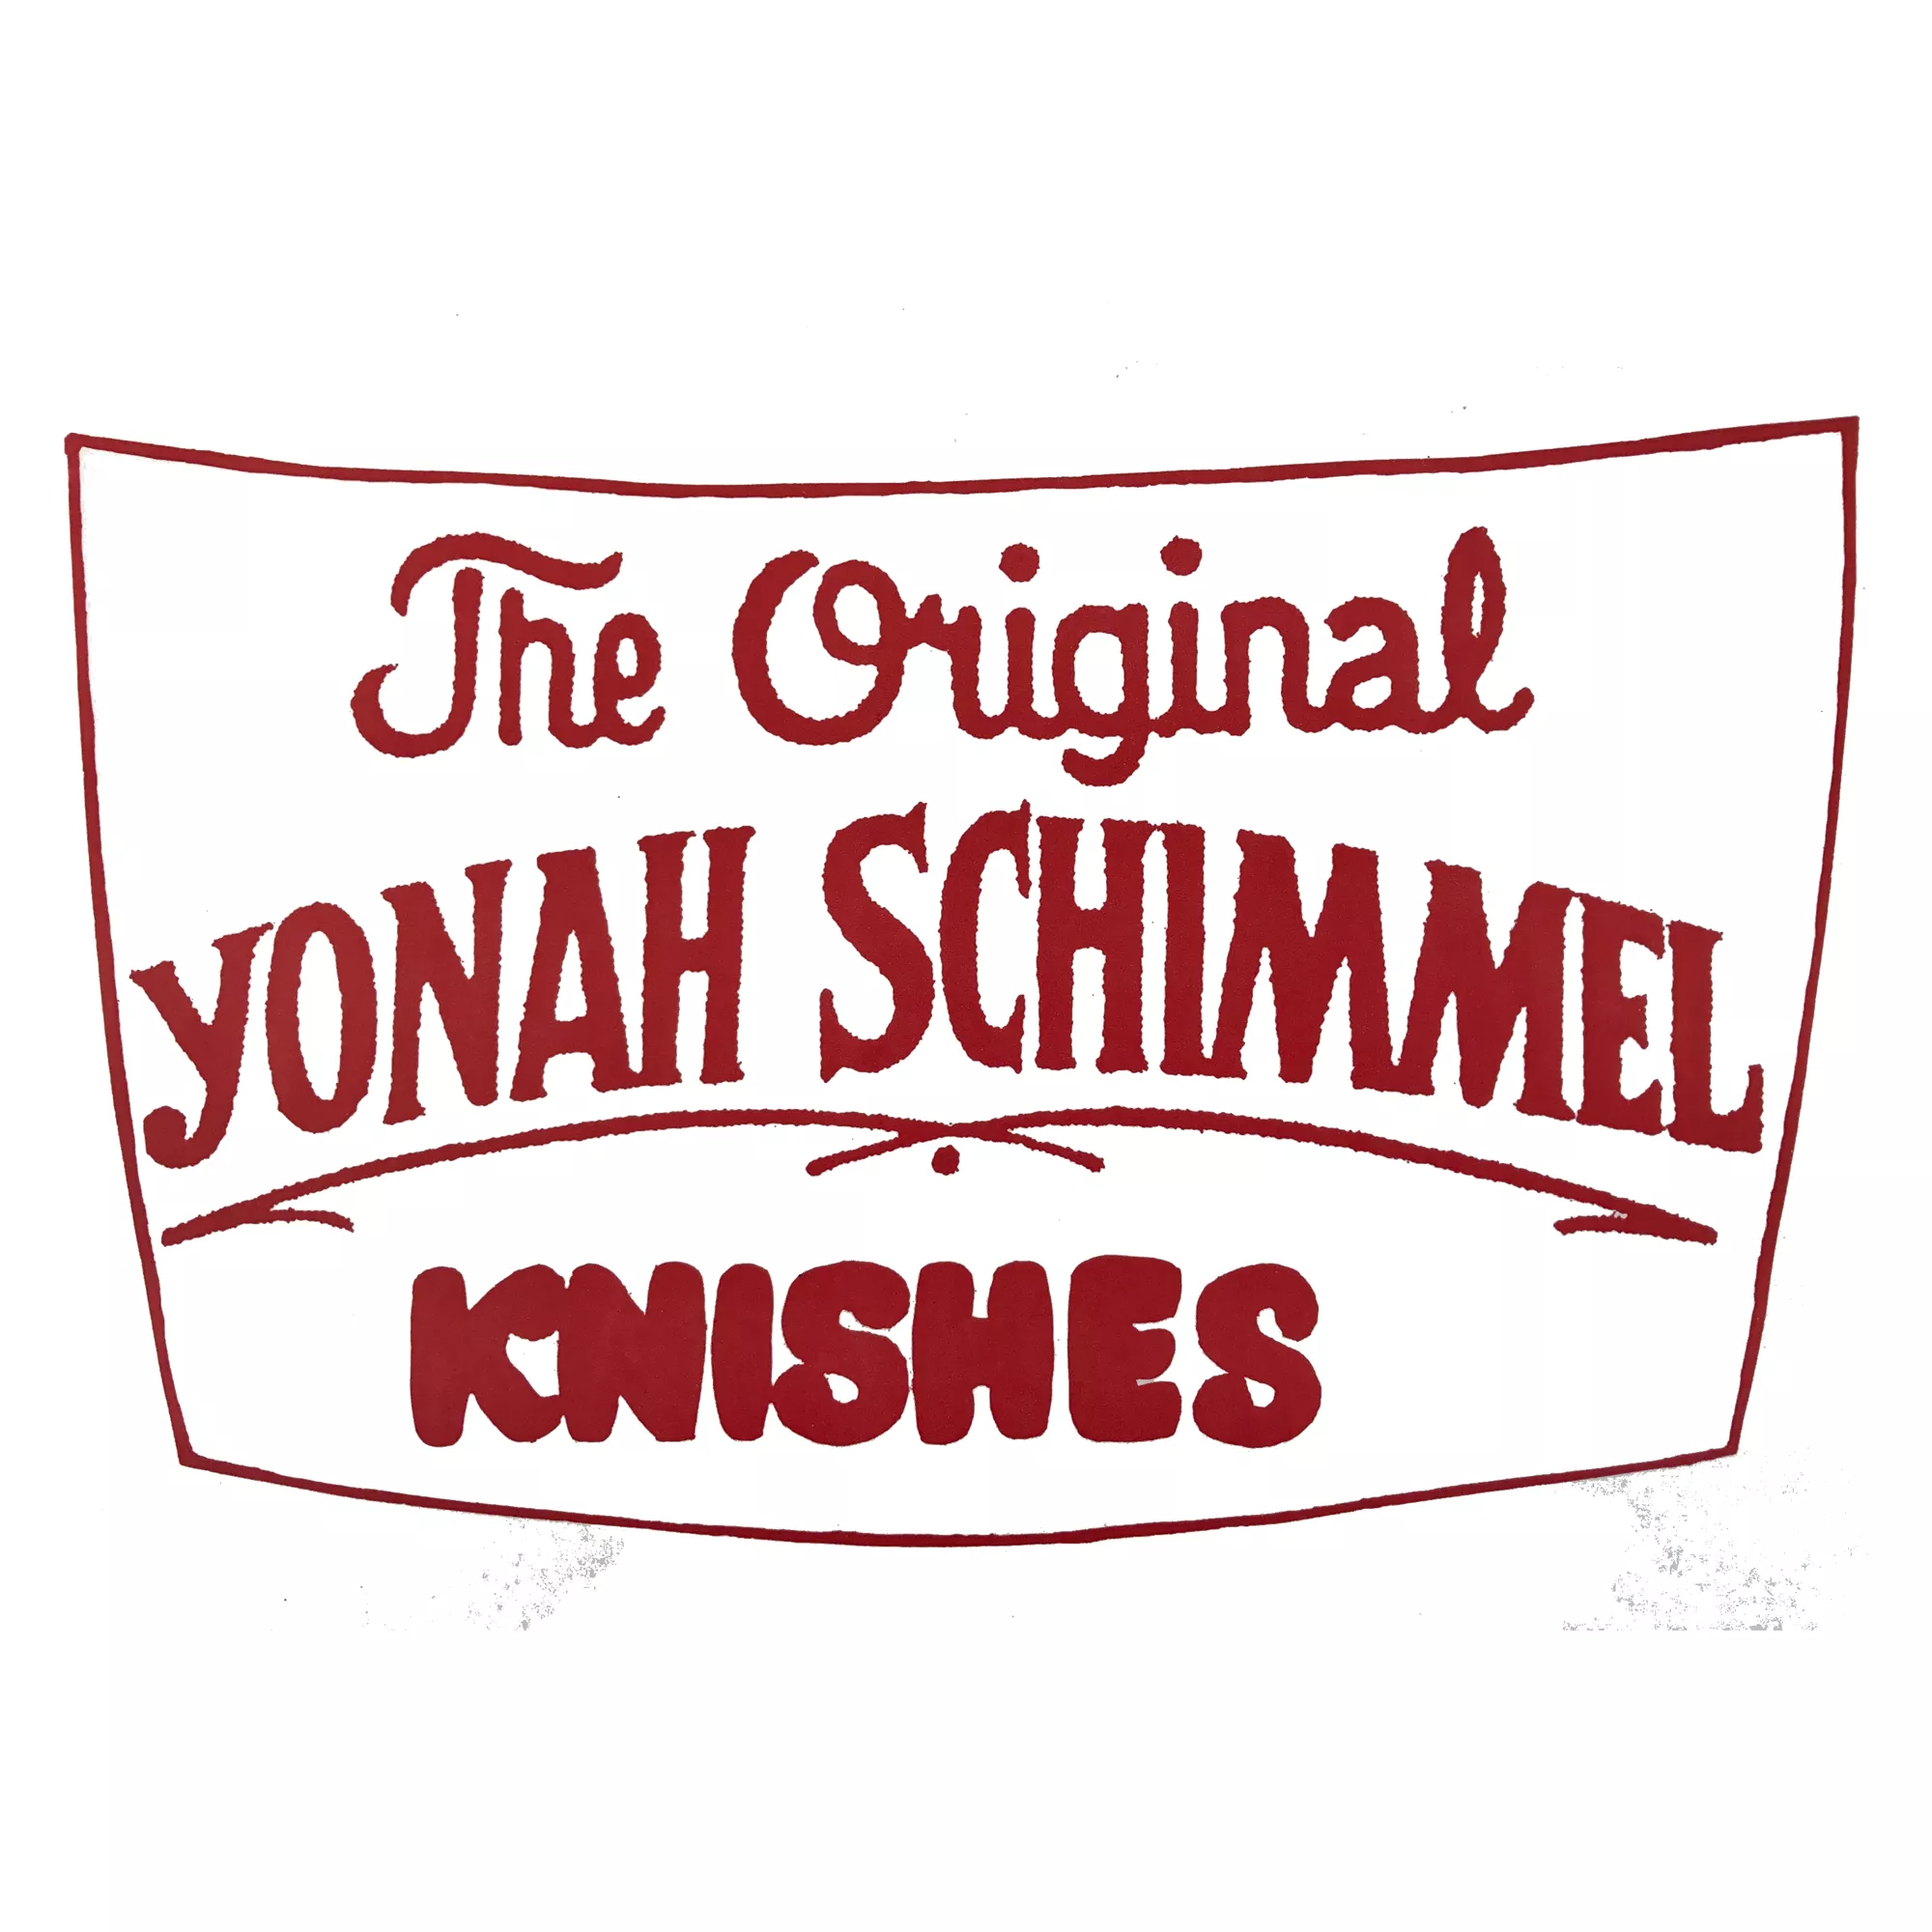 Yonah Schimmel's Knish Bakery New York